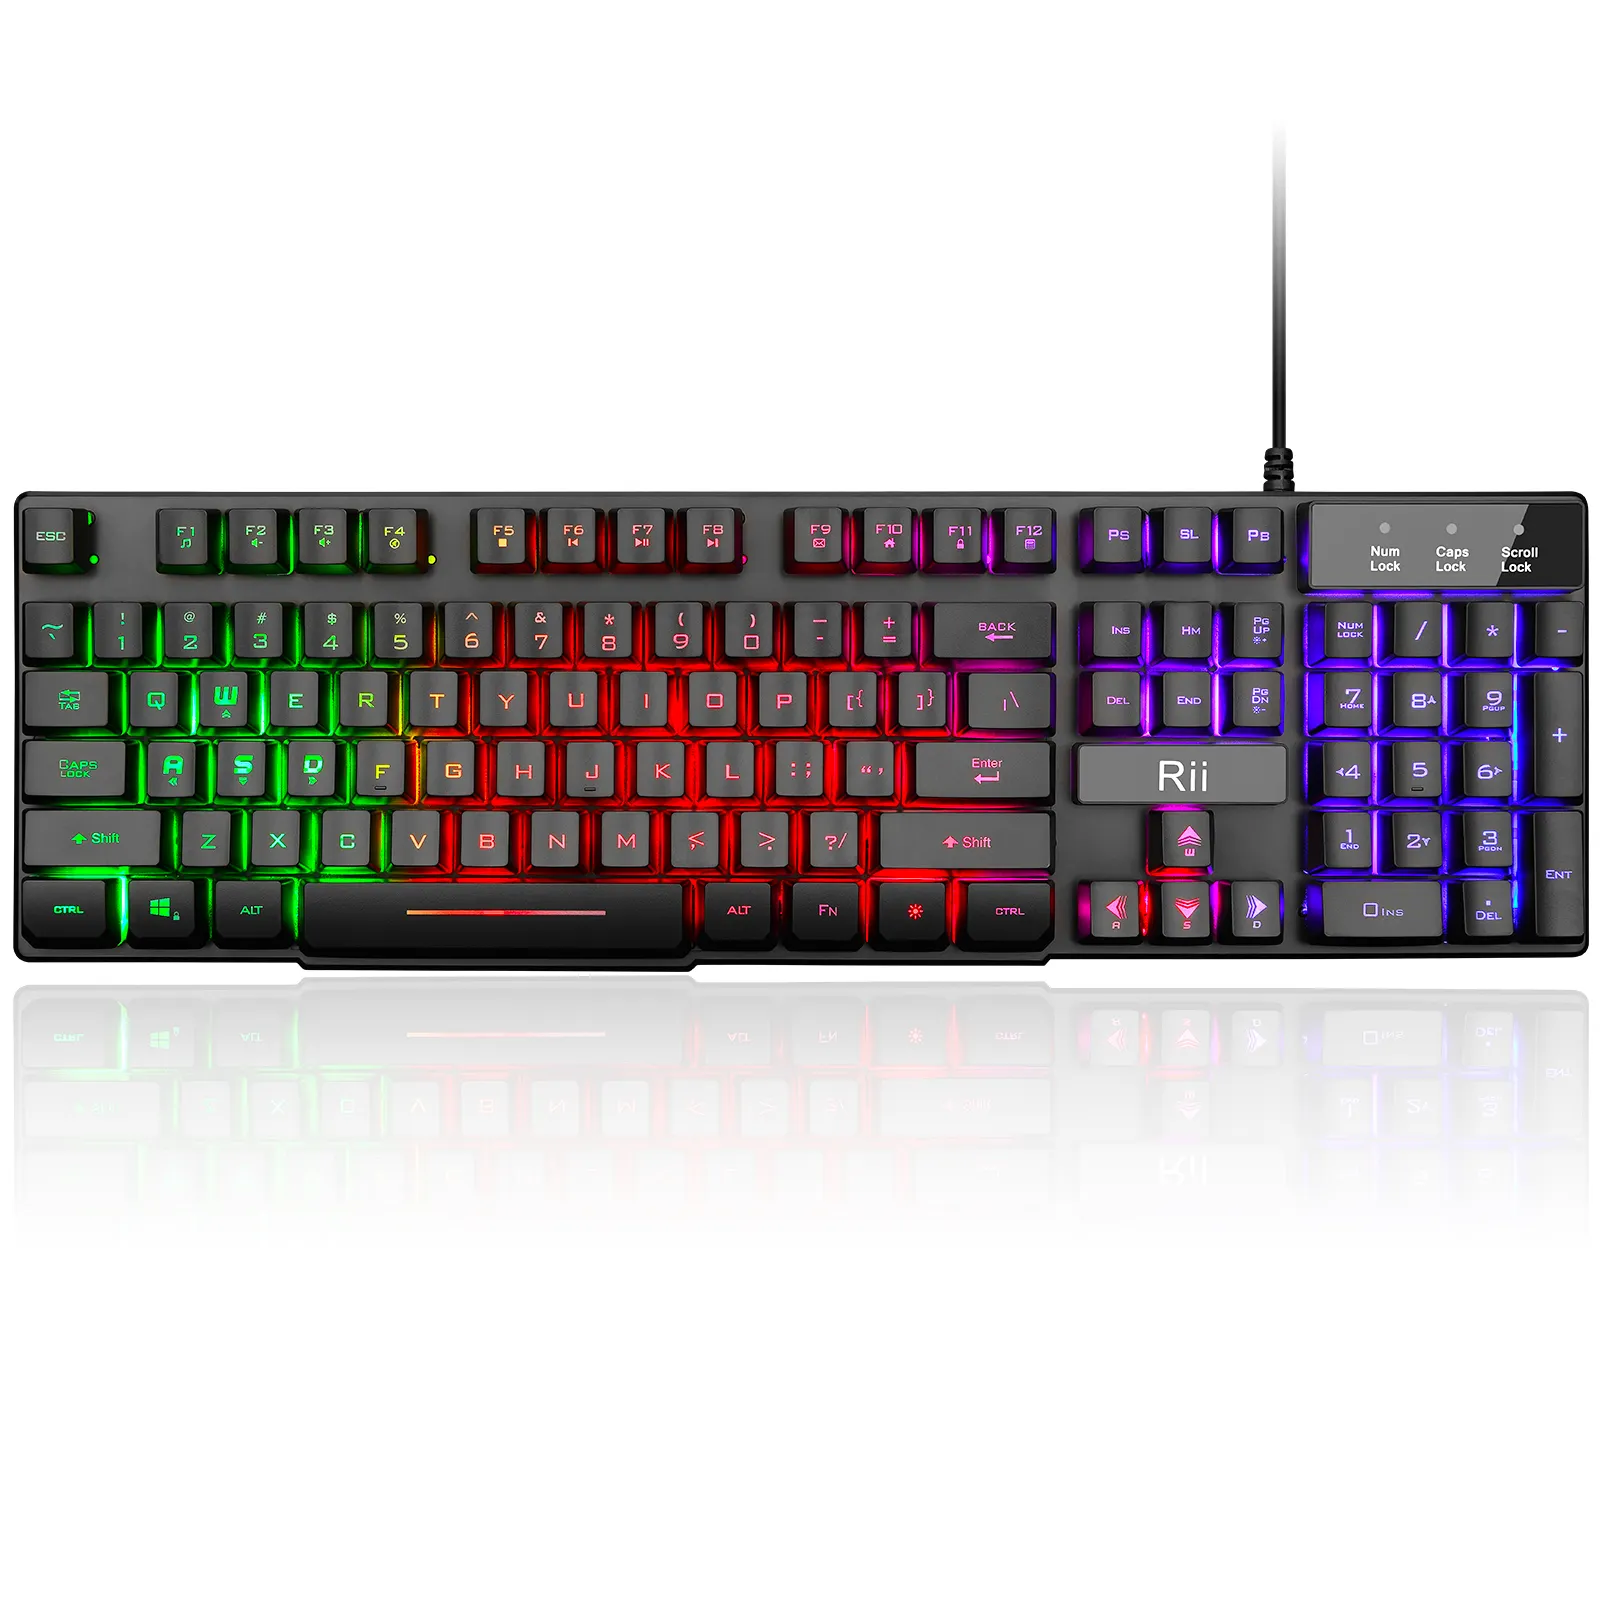 Bactlit Gaming Keyboard,Rii RK100 Plus 7 Color Rainbow LED Backlit Mechanical Feeling USB Wired Gaming Keyboard